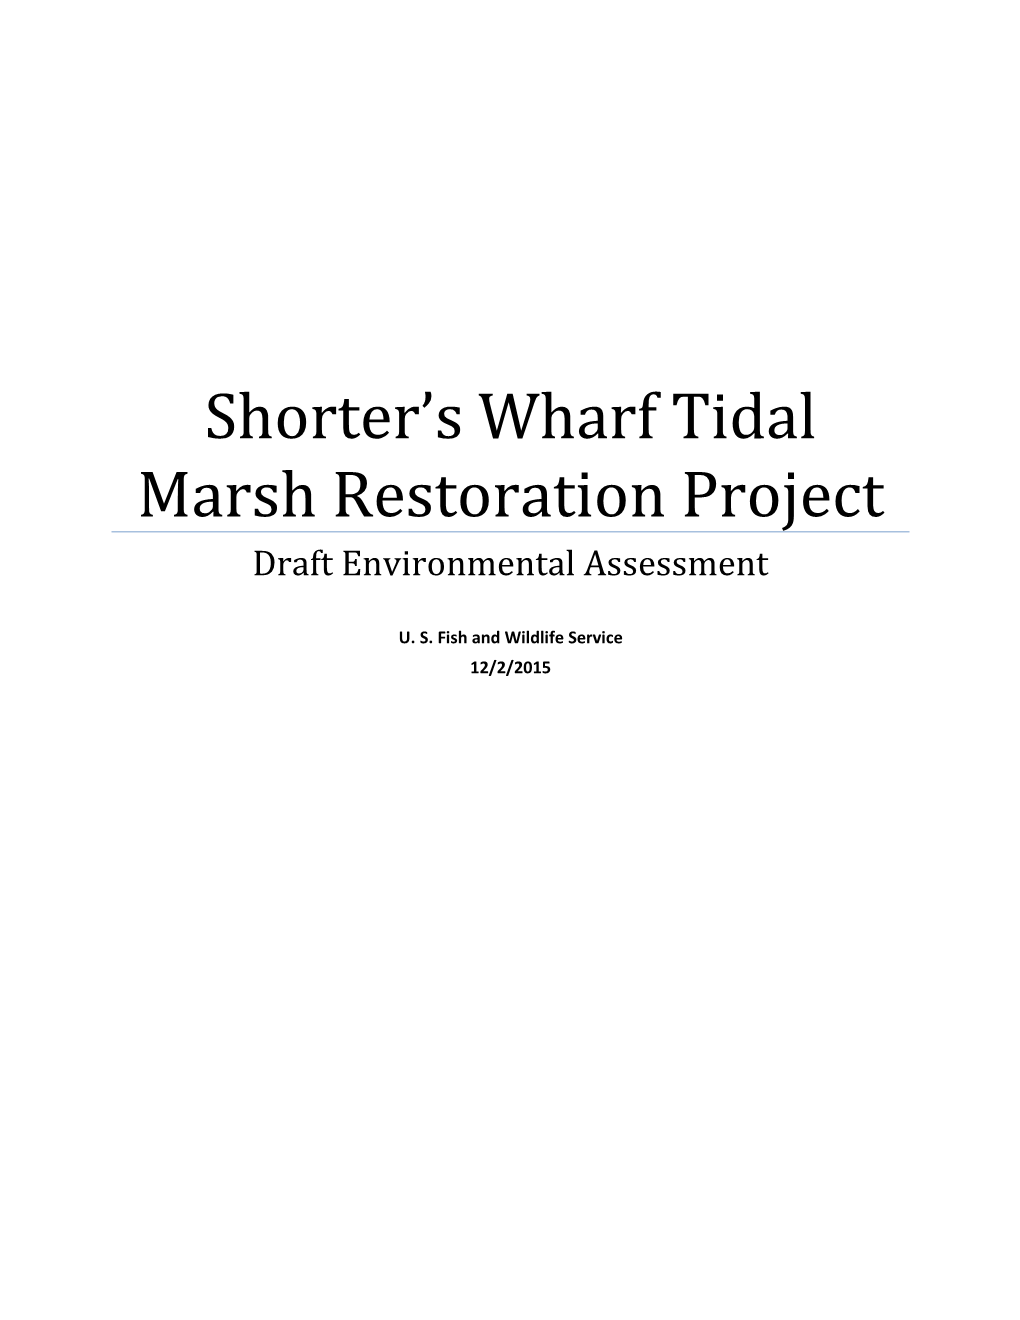 Shorter's Wharf Tidal Marsh Restoration Project